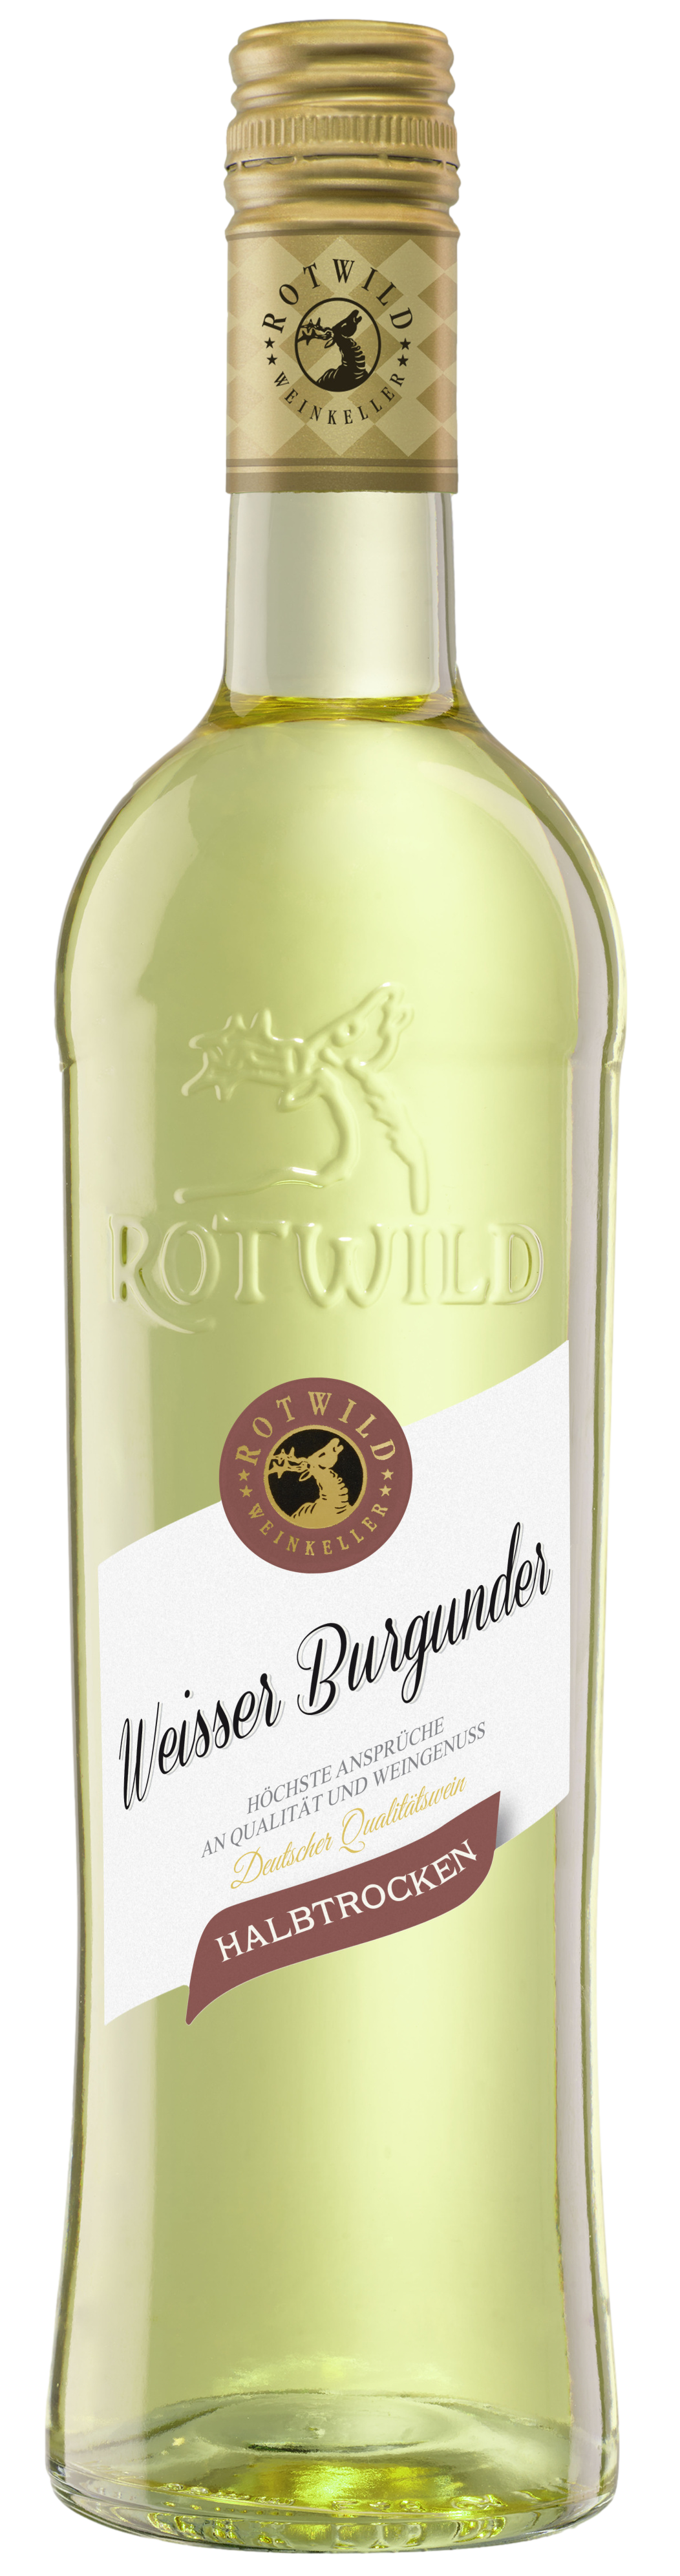 Rotwild Probierpaket (6 x 0,75l) + VINOX Winecards